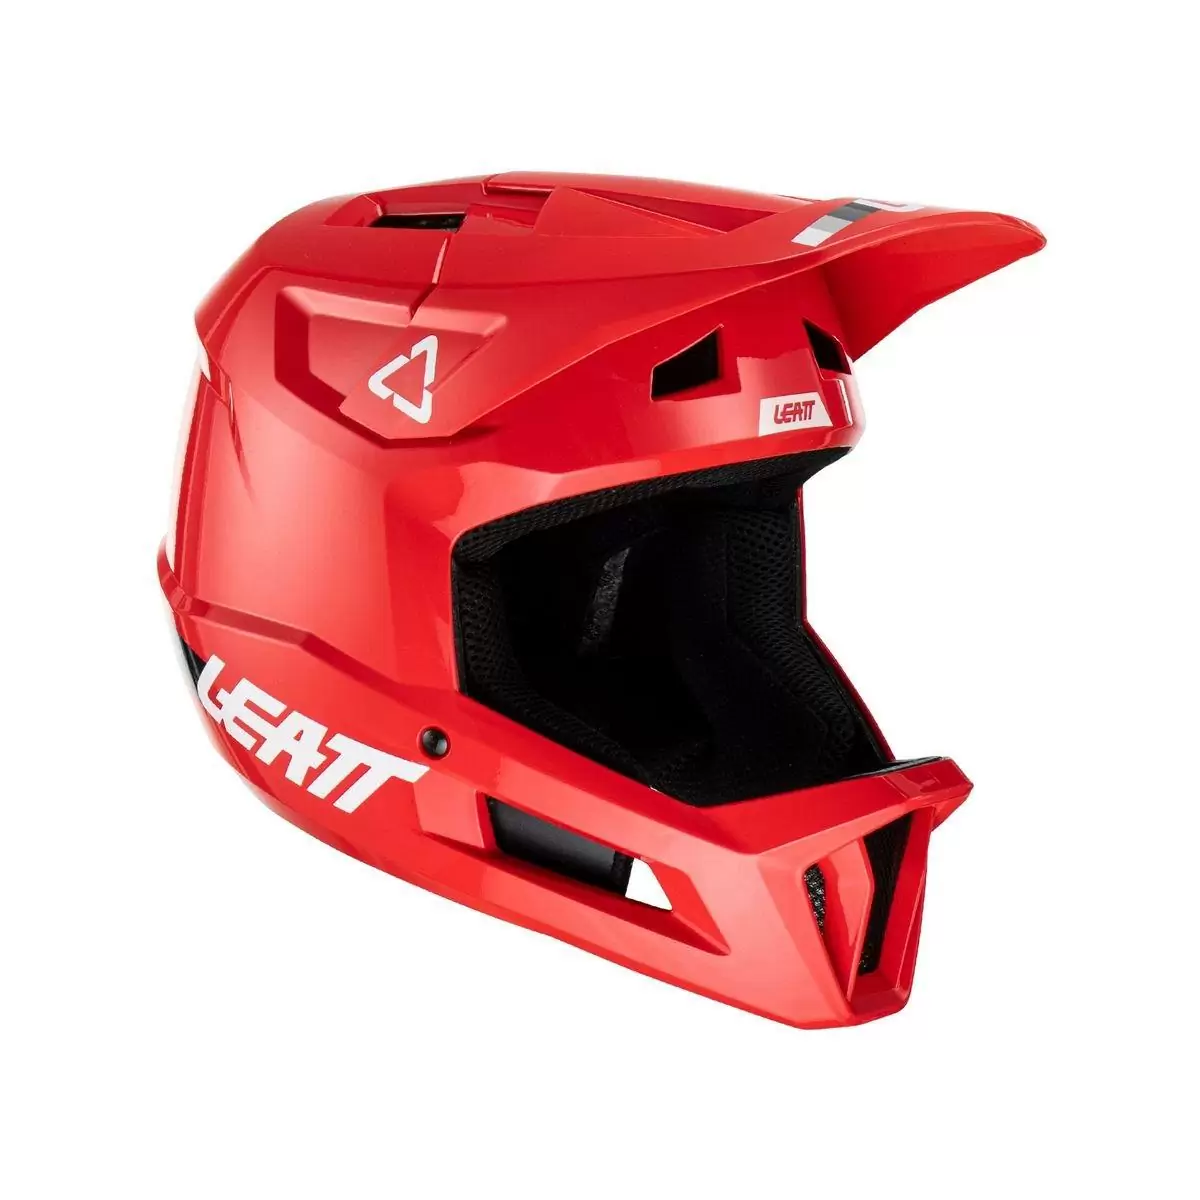 Gravity 1.0 MTB Fullface Helmet Red Size XL (61-62cm) #3